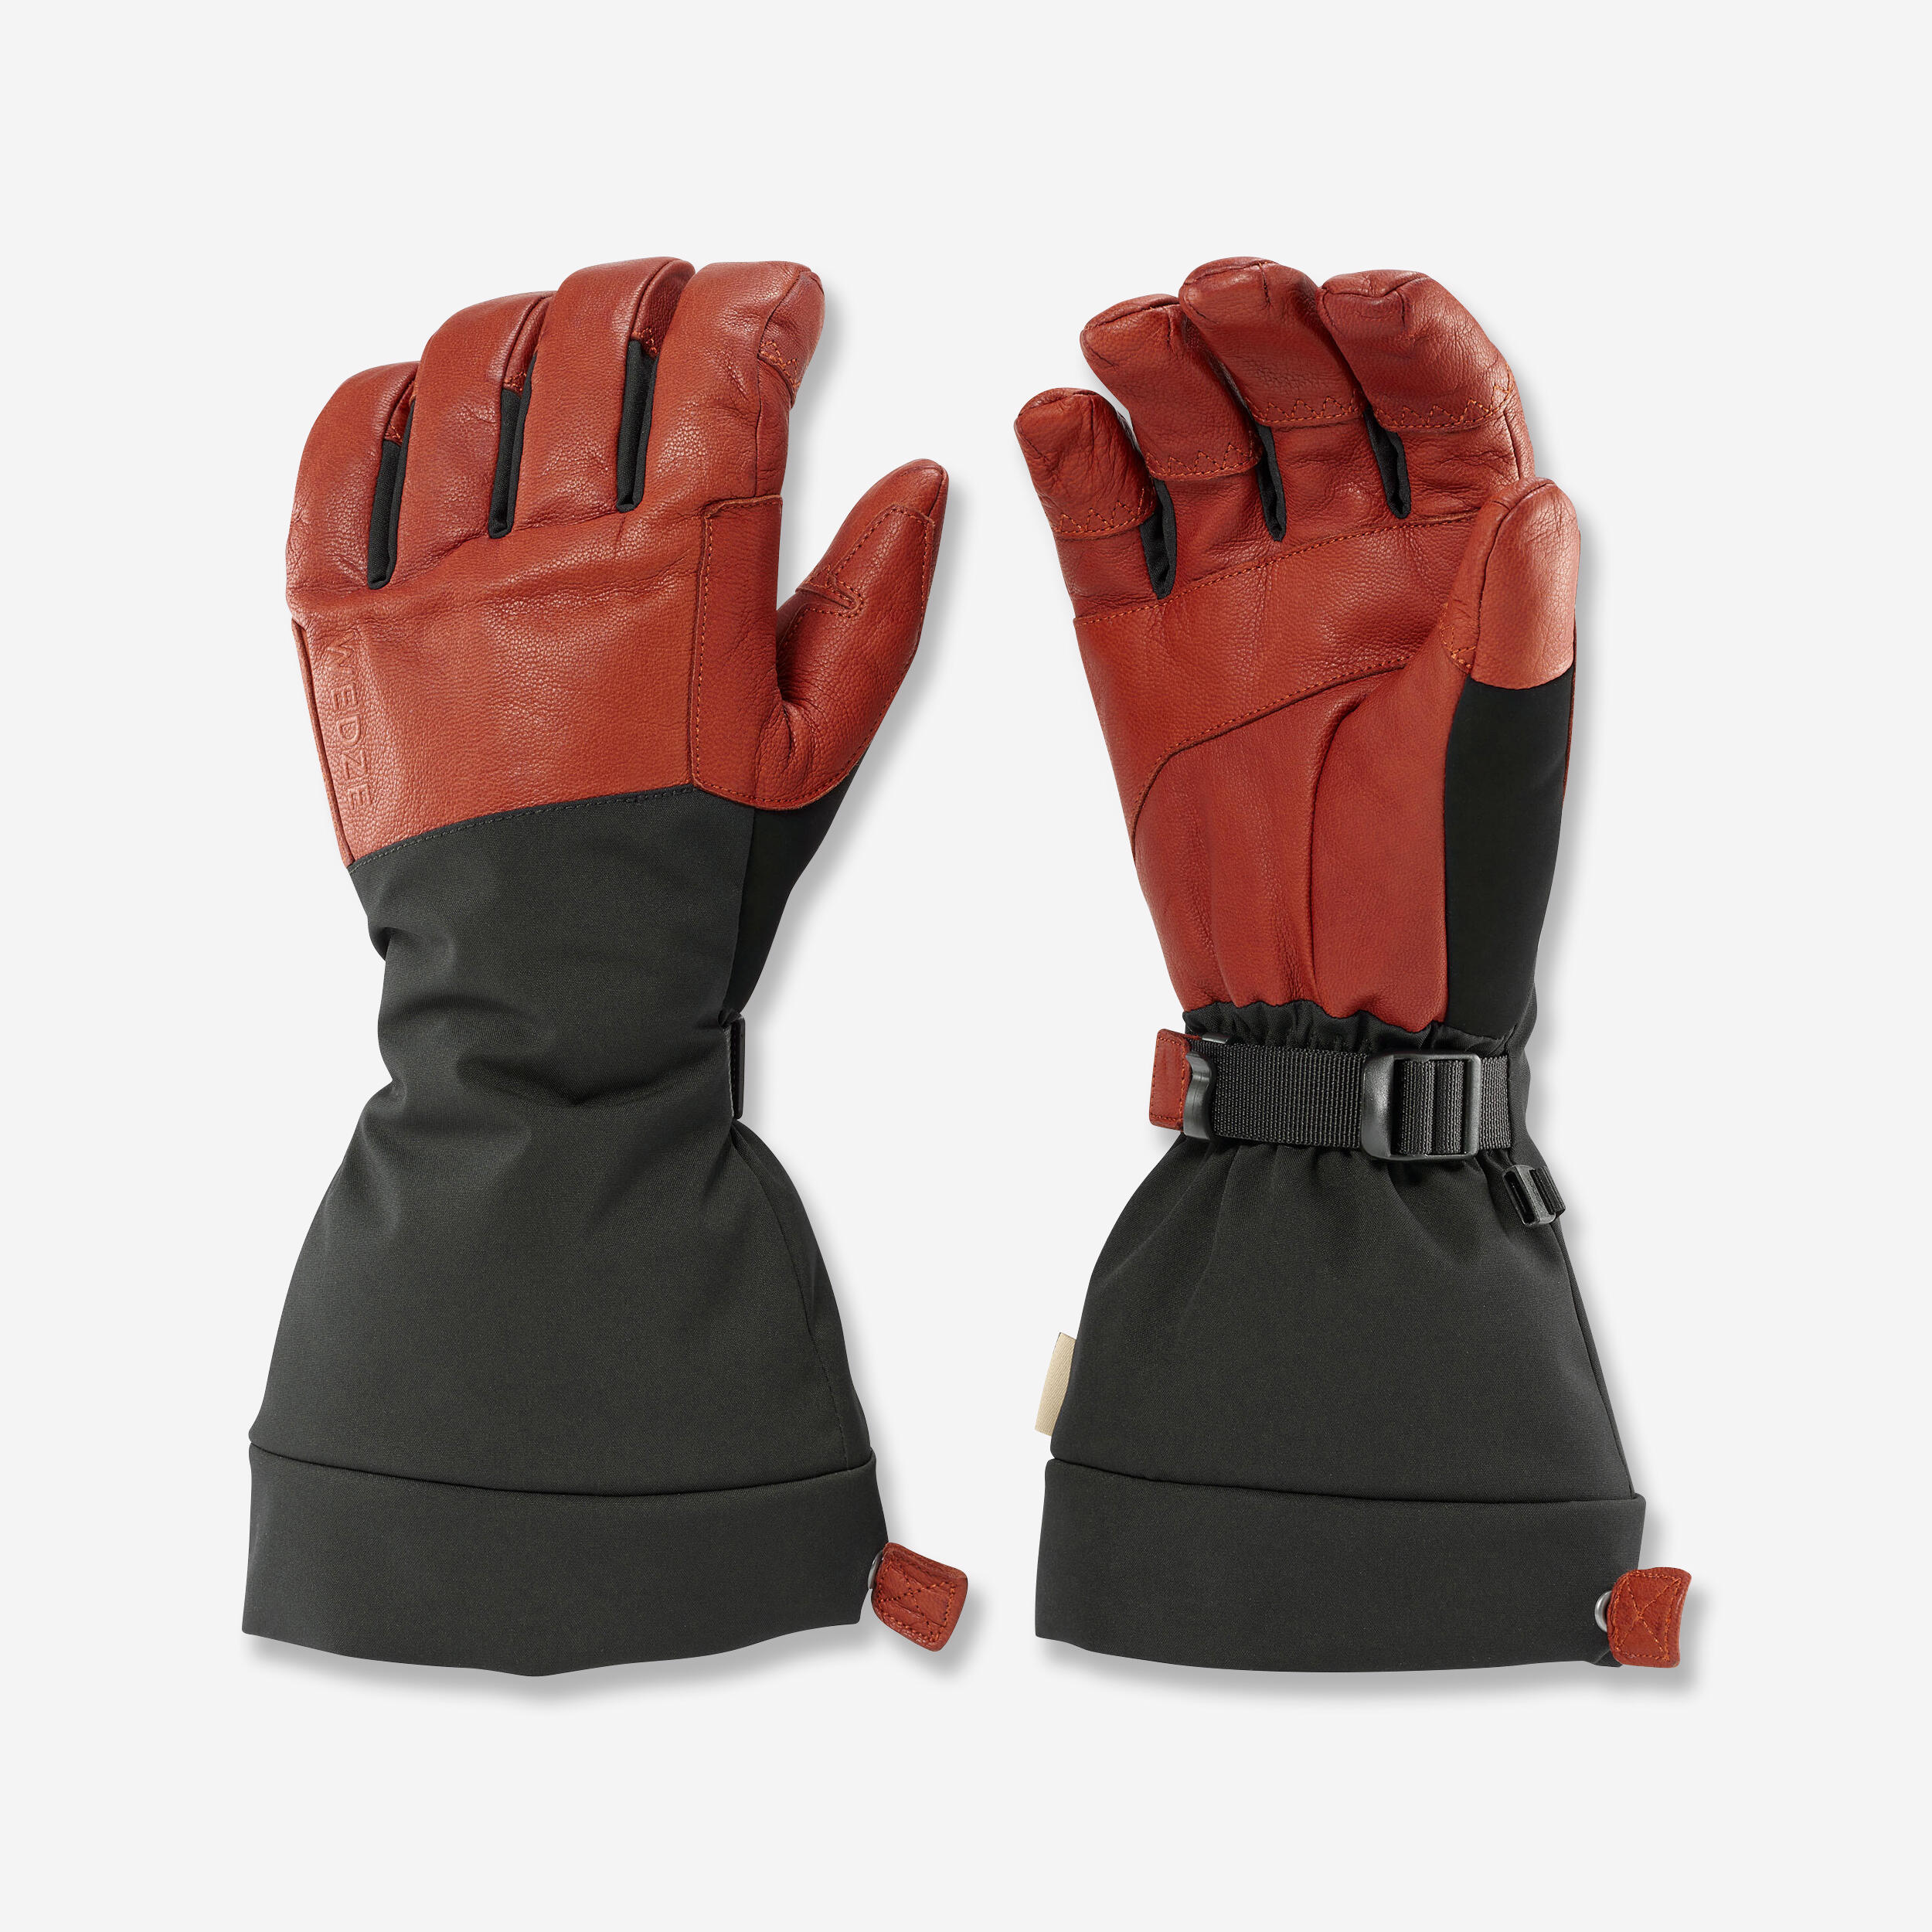 Image of Warm Ski Gloves - 900 Brown/Black